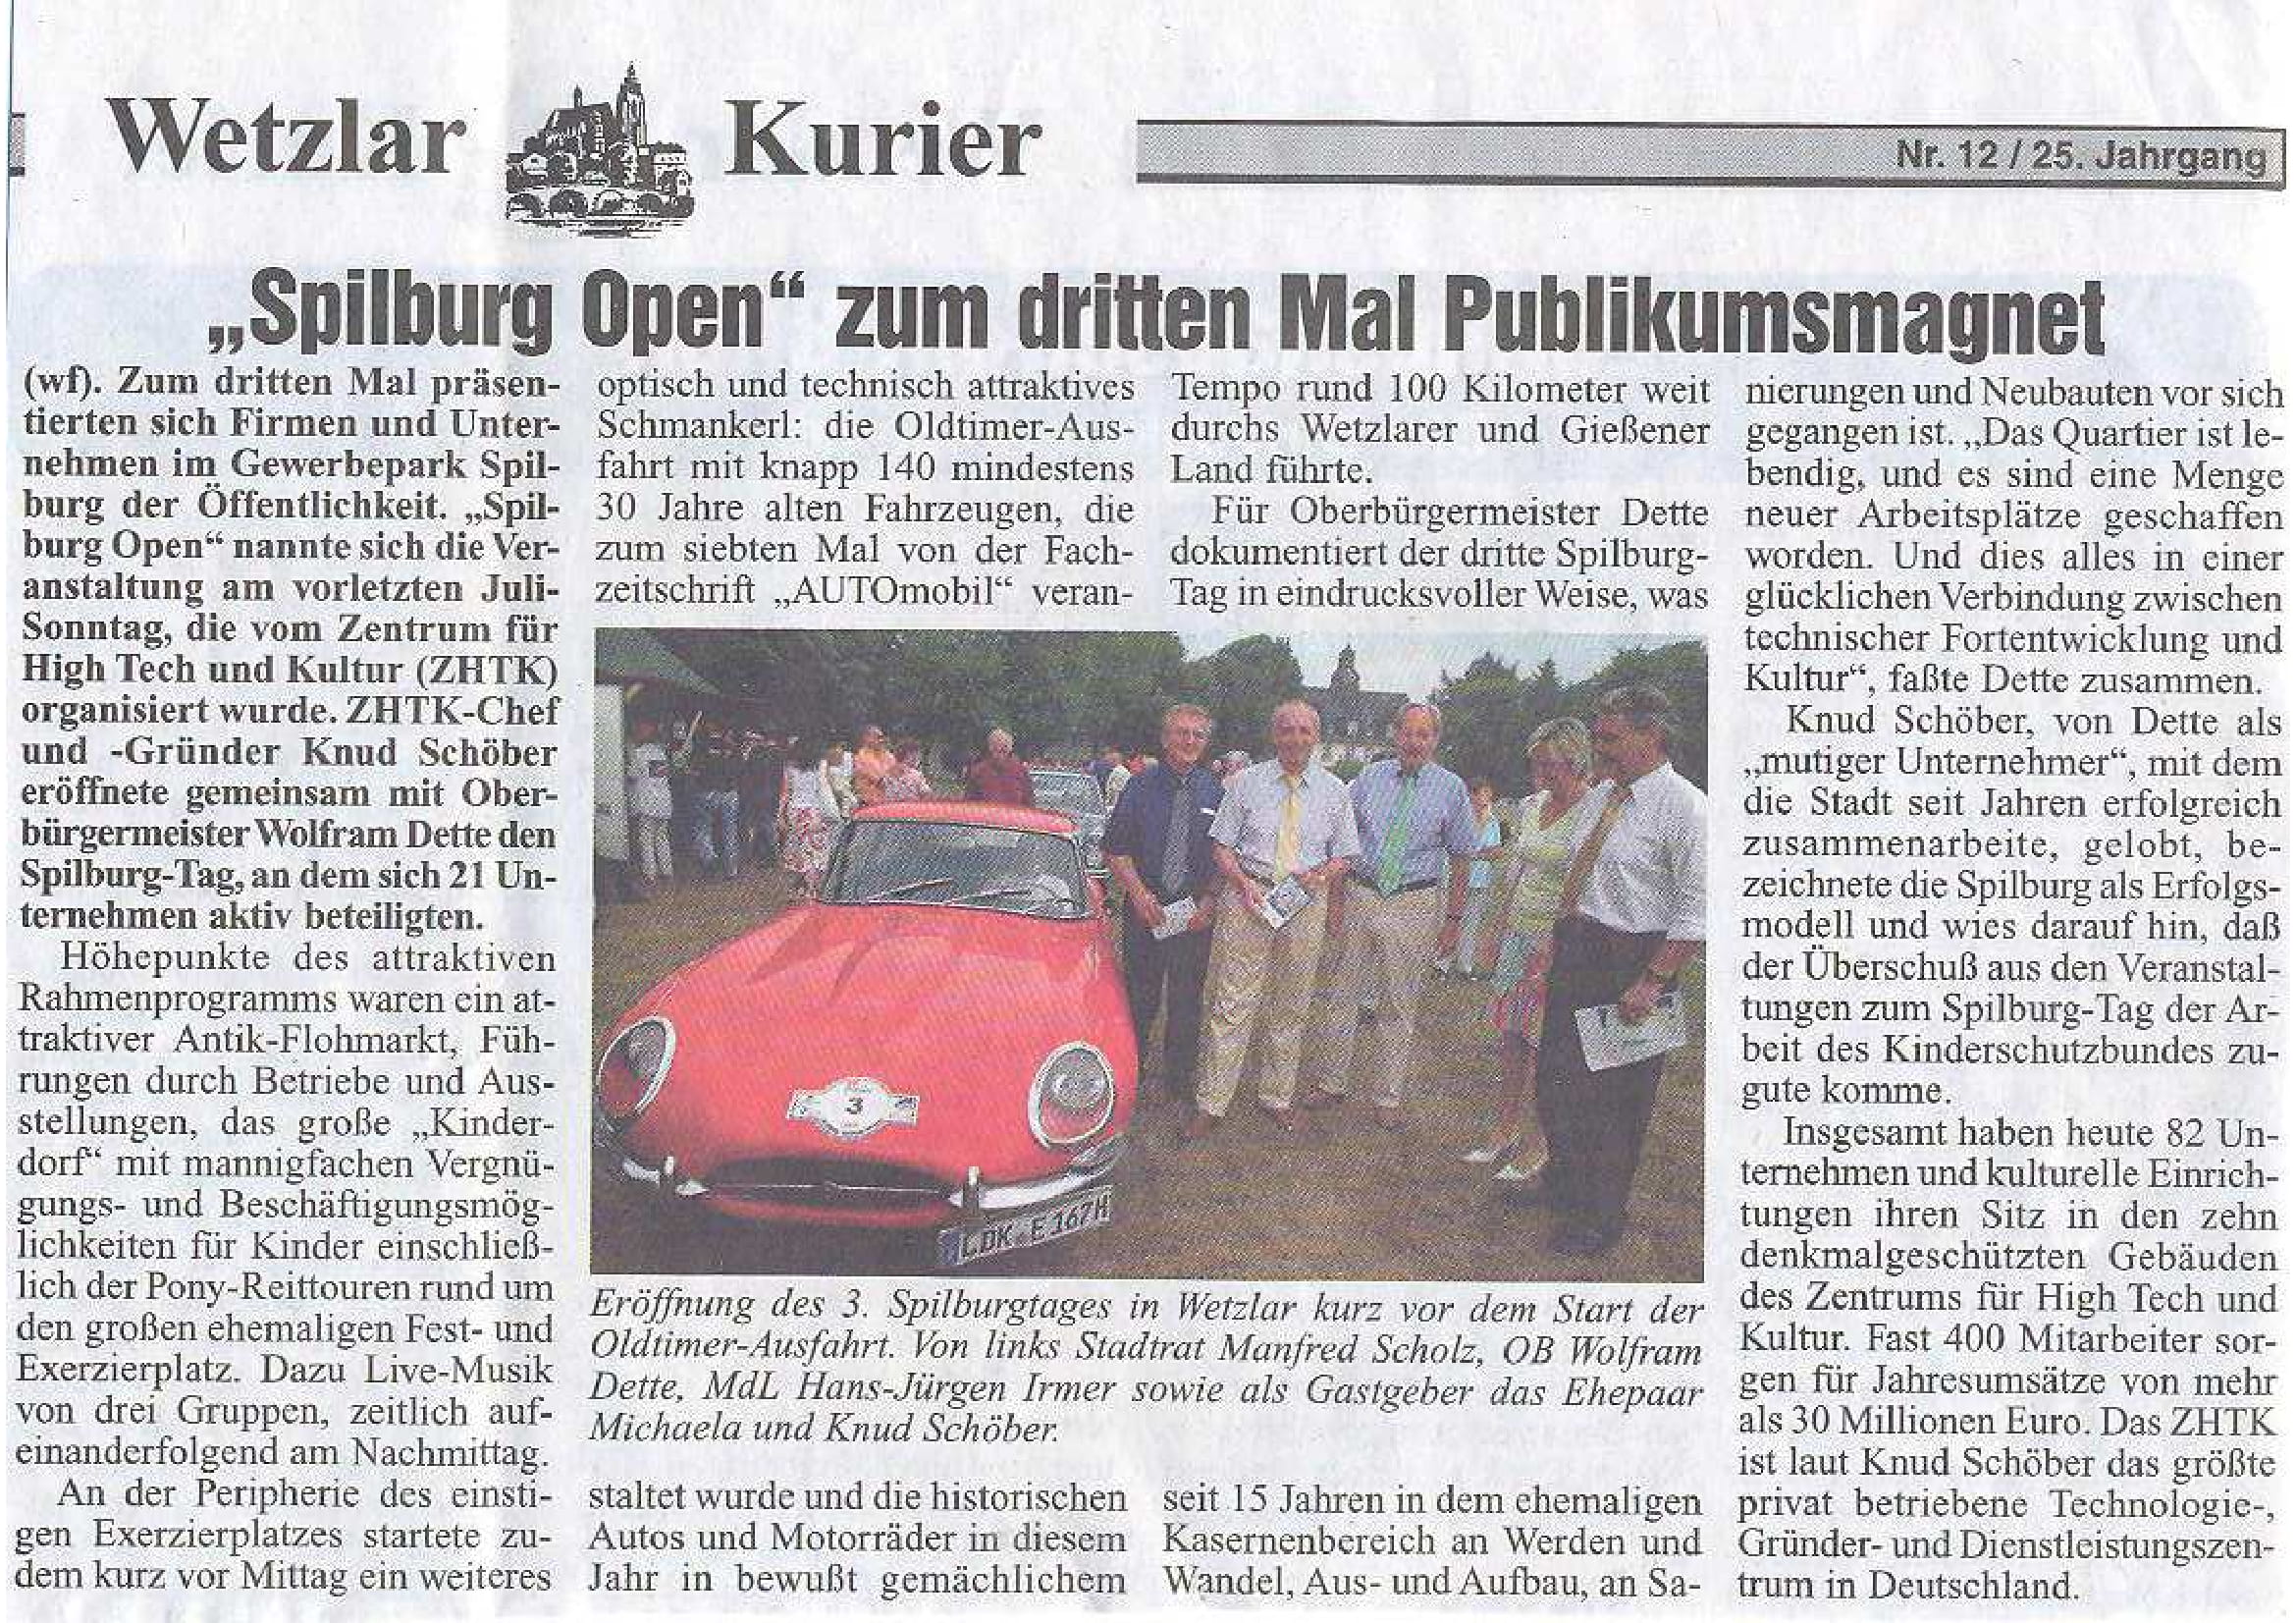 Wetzlar Spilburg Open Artikel